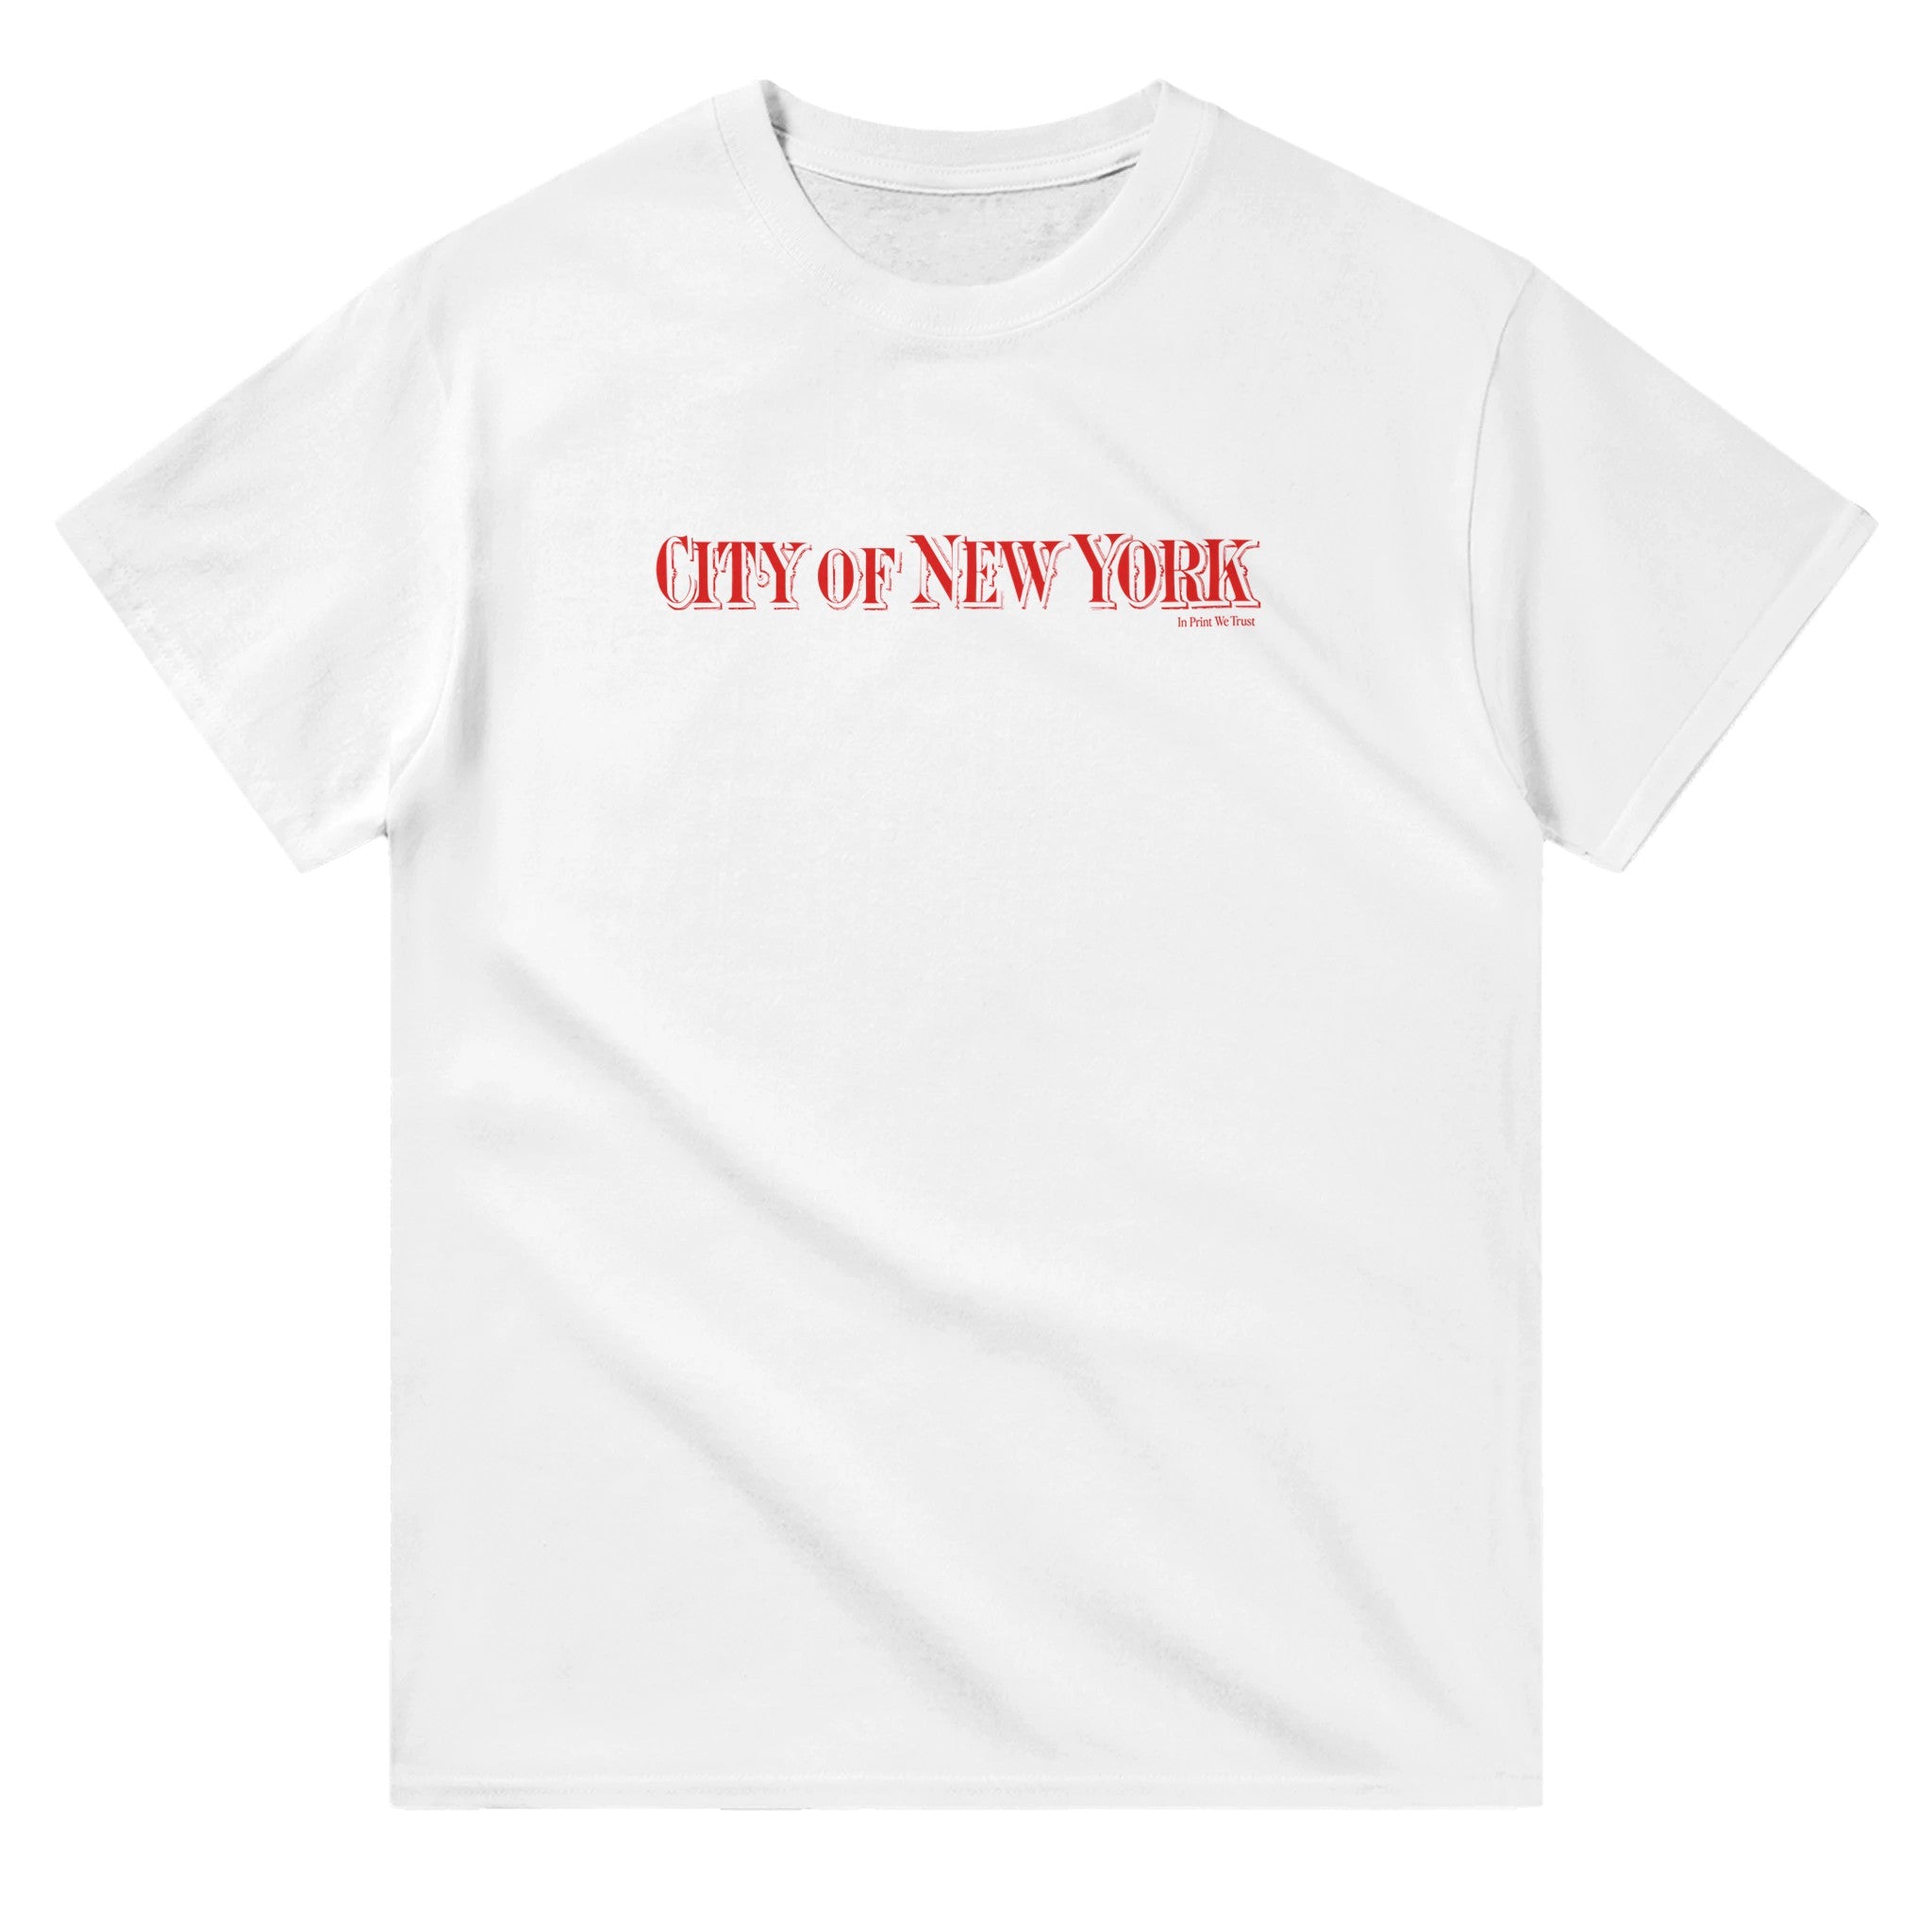 'City of New York' classic tee - In Print We Trust